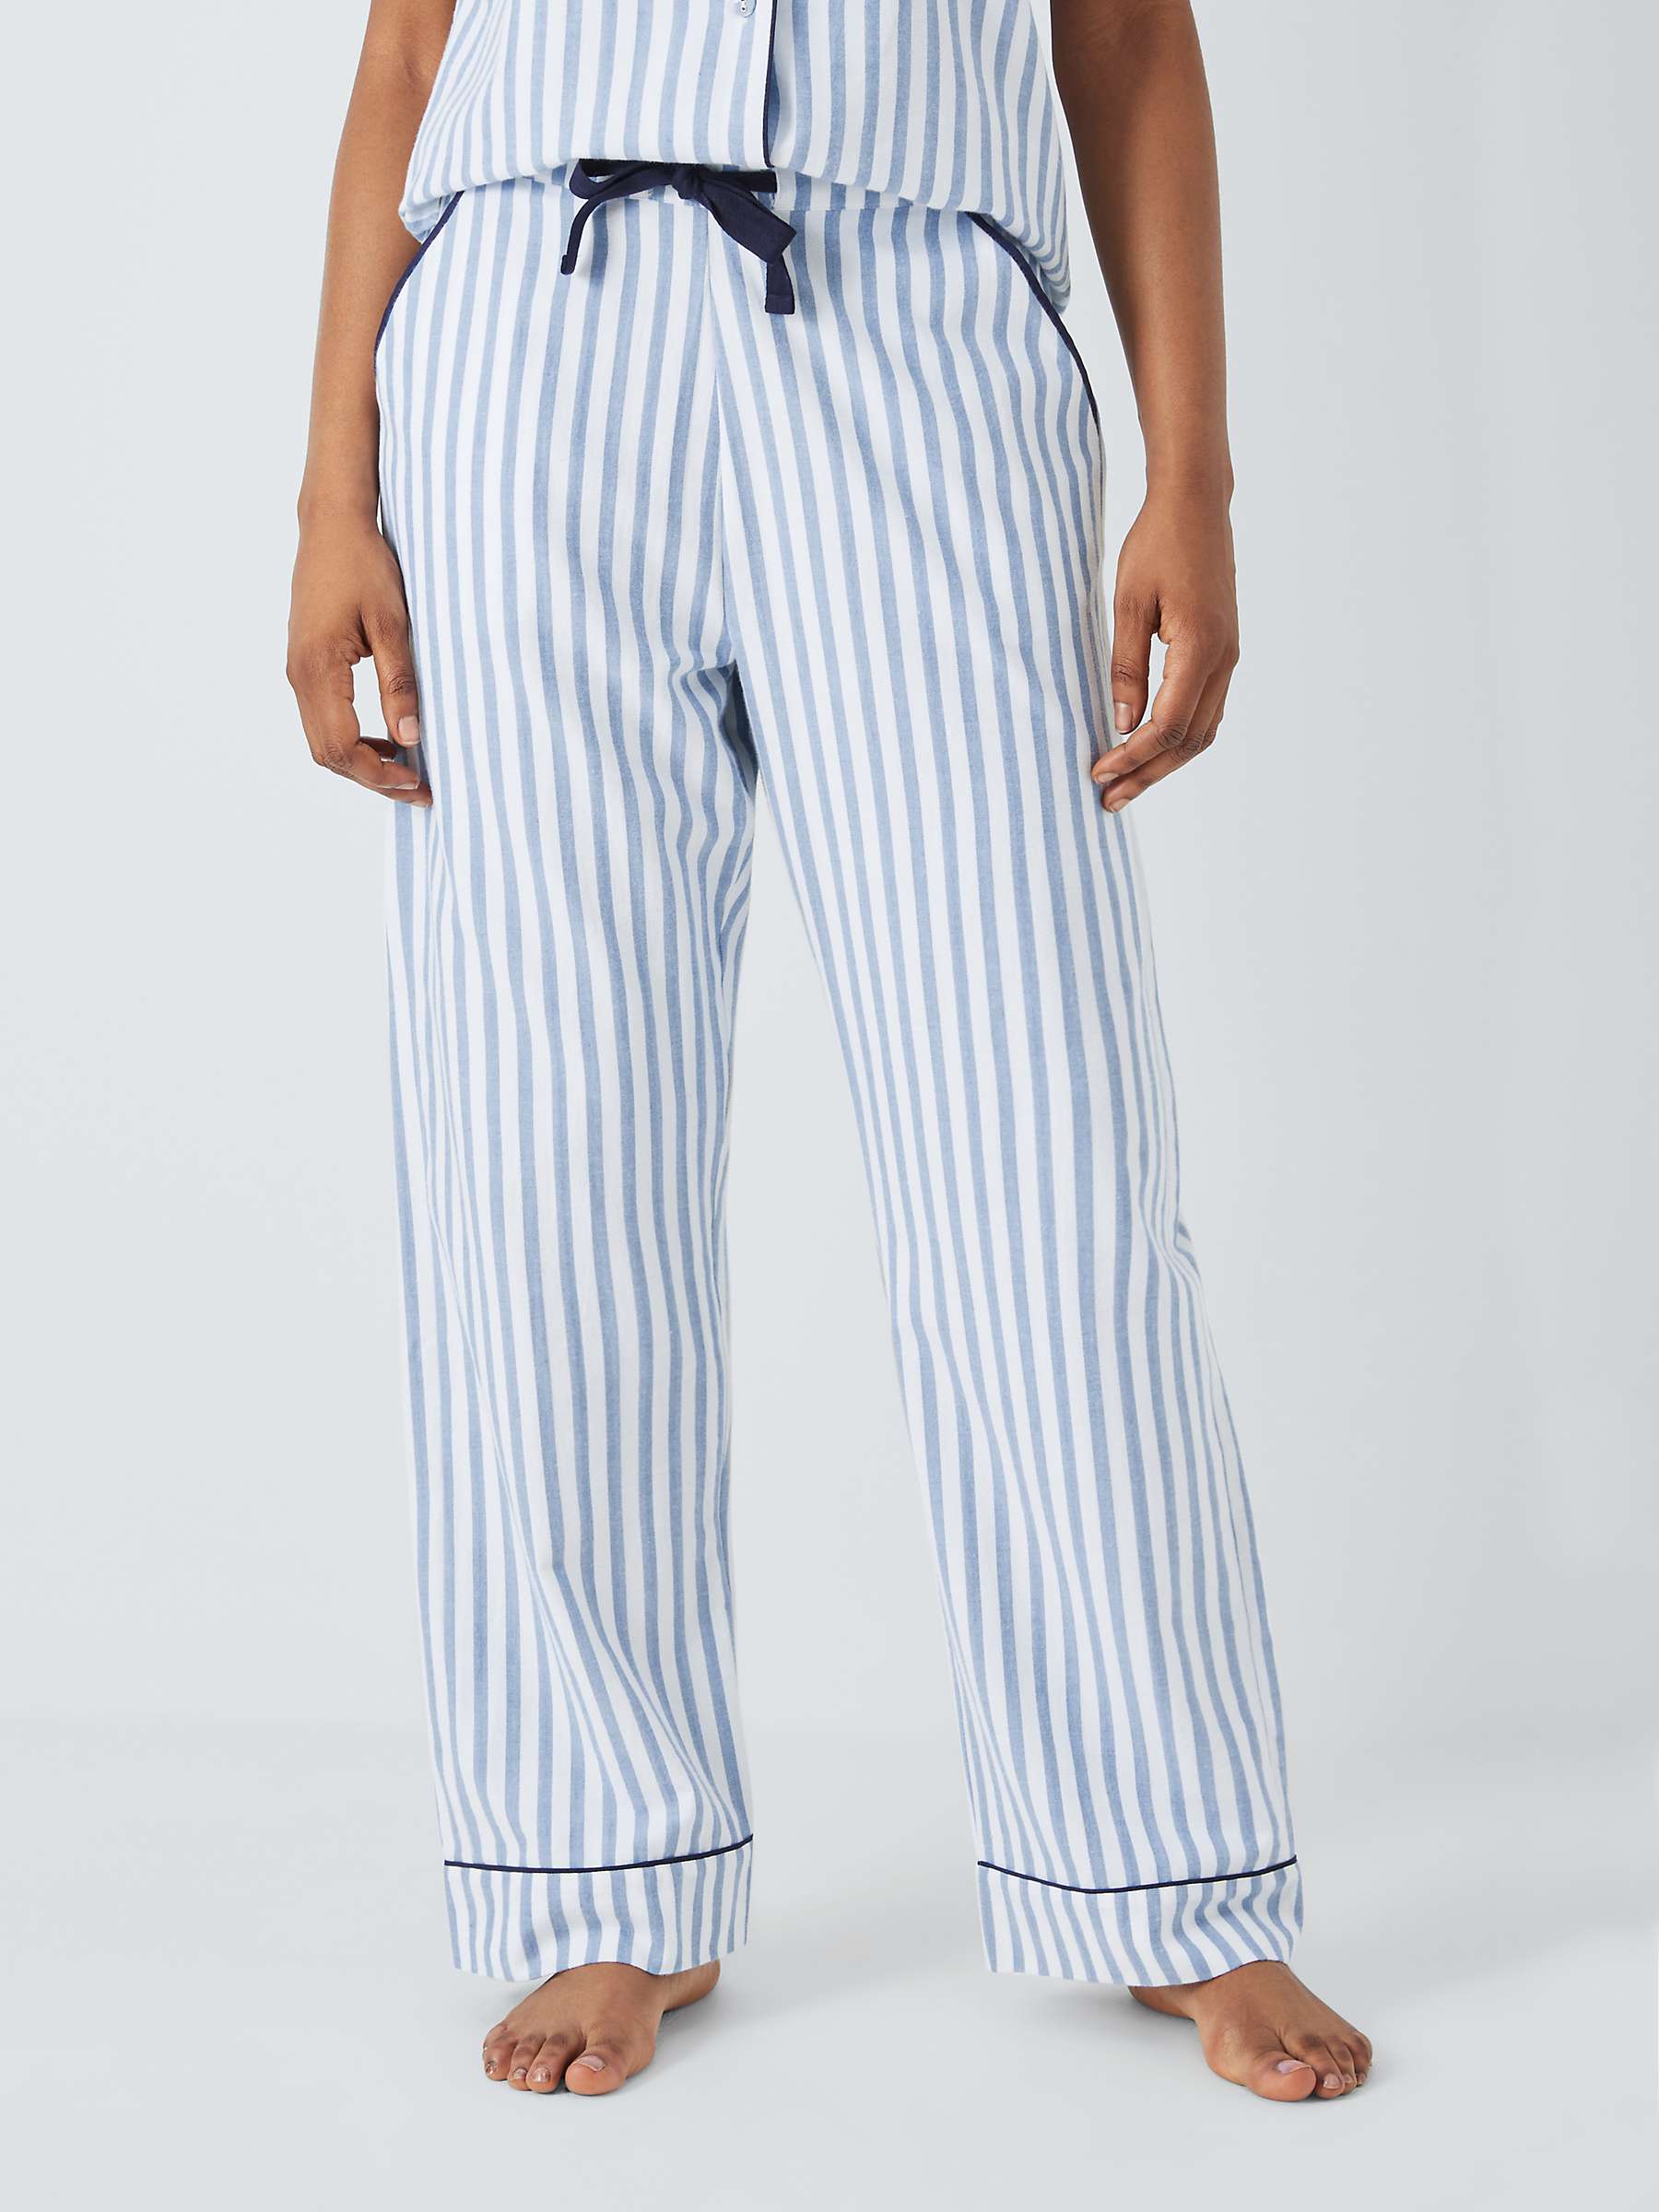 Buy John Lewis Luna Stripe Pyjama Bottoms Online at johnlewis.com